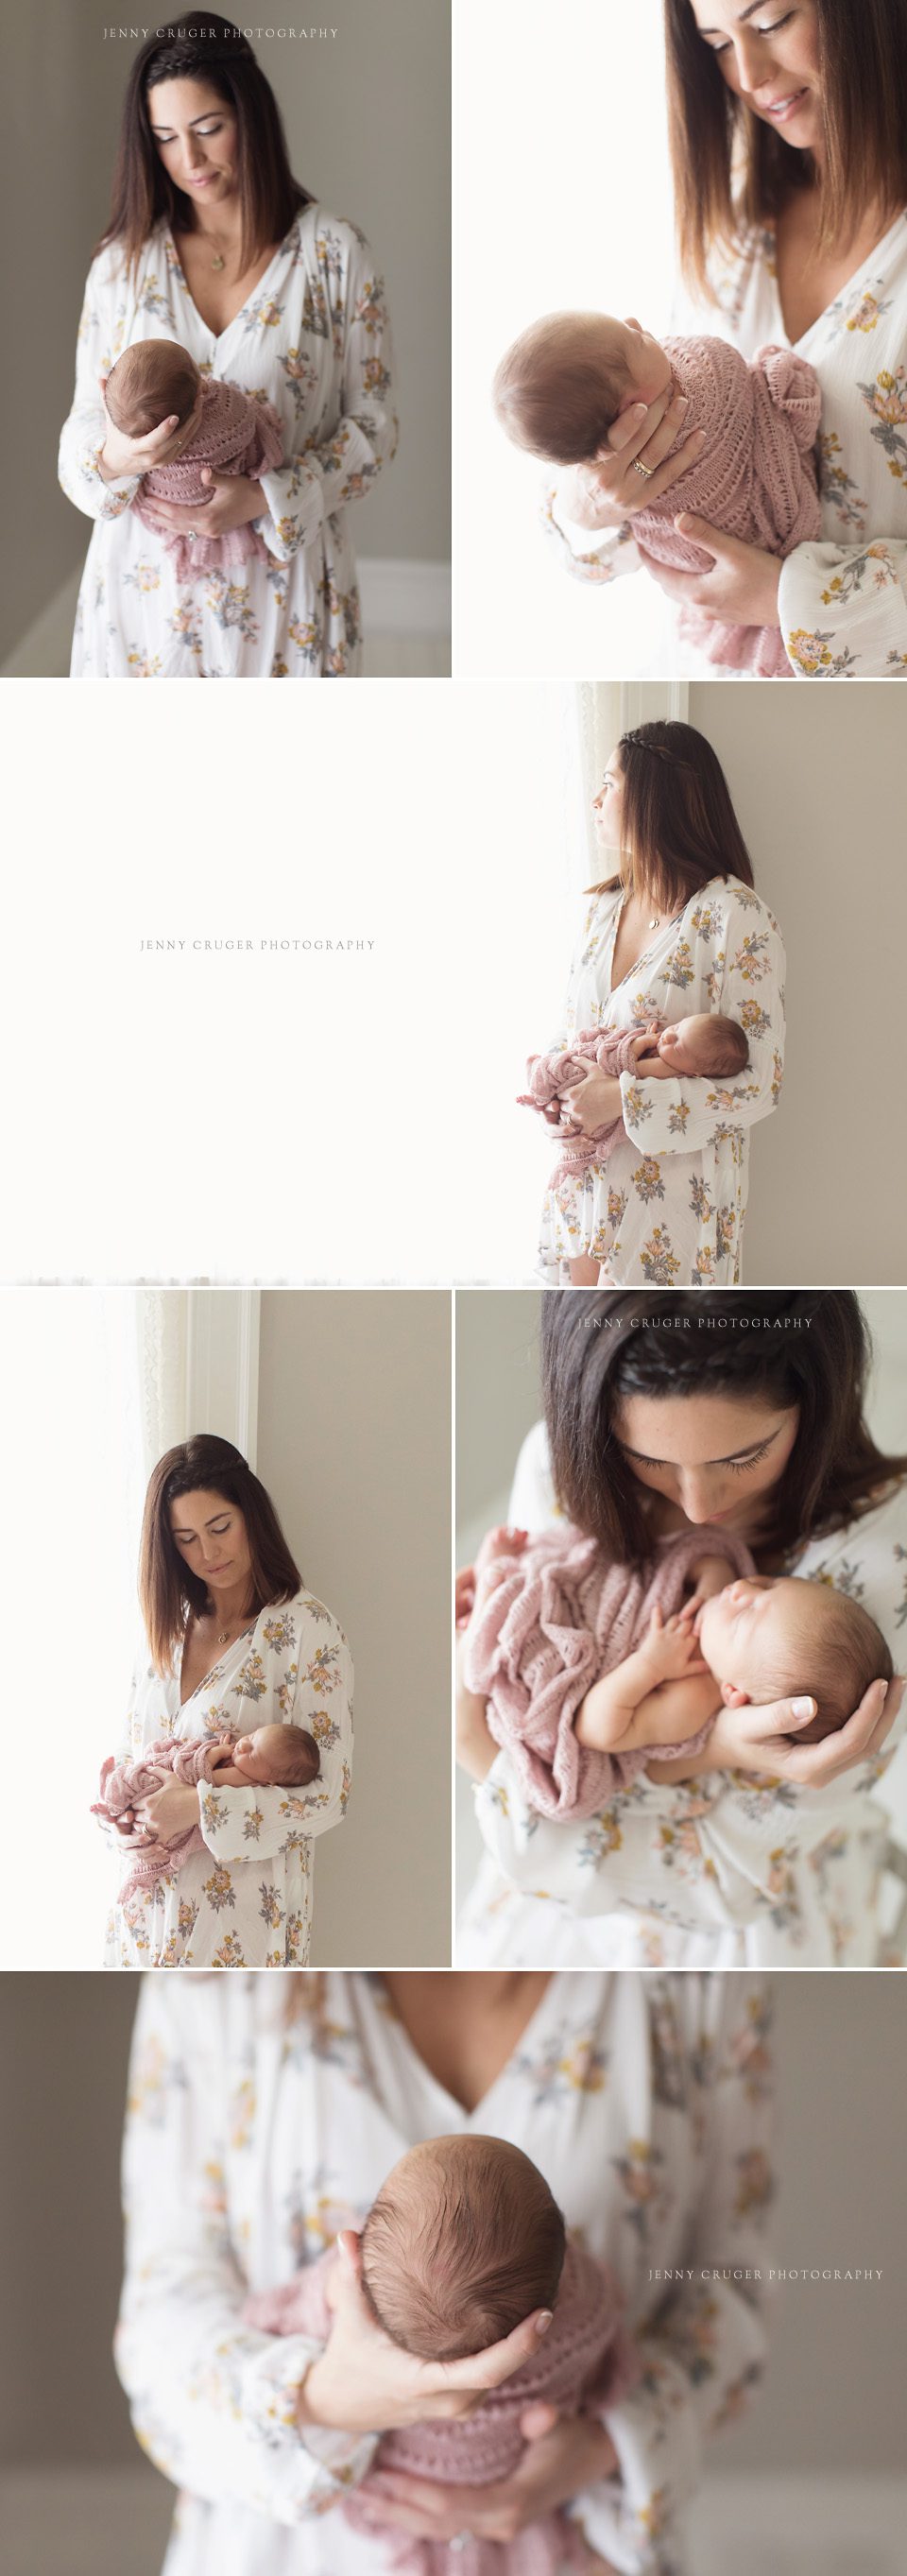 nashville newborn photographers | mom holding newborn baby photos